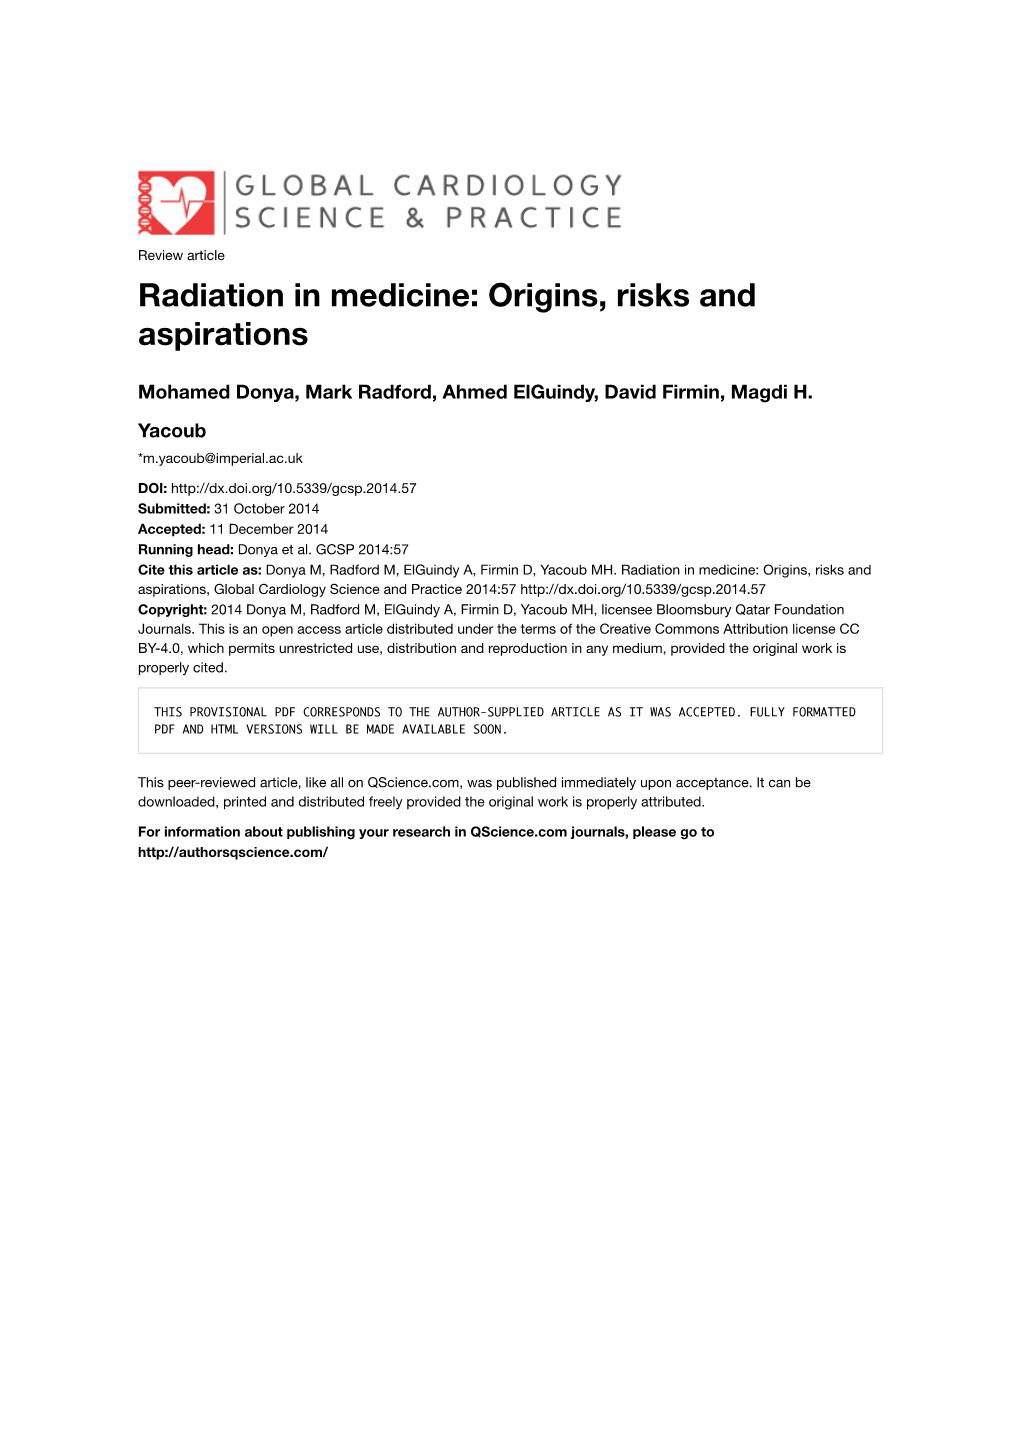 Radiation in Medicine: Origins, Risks and Aspirations